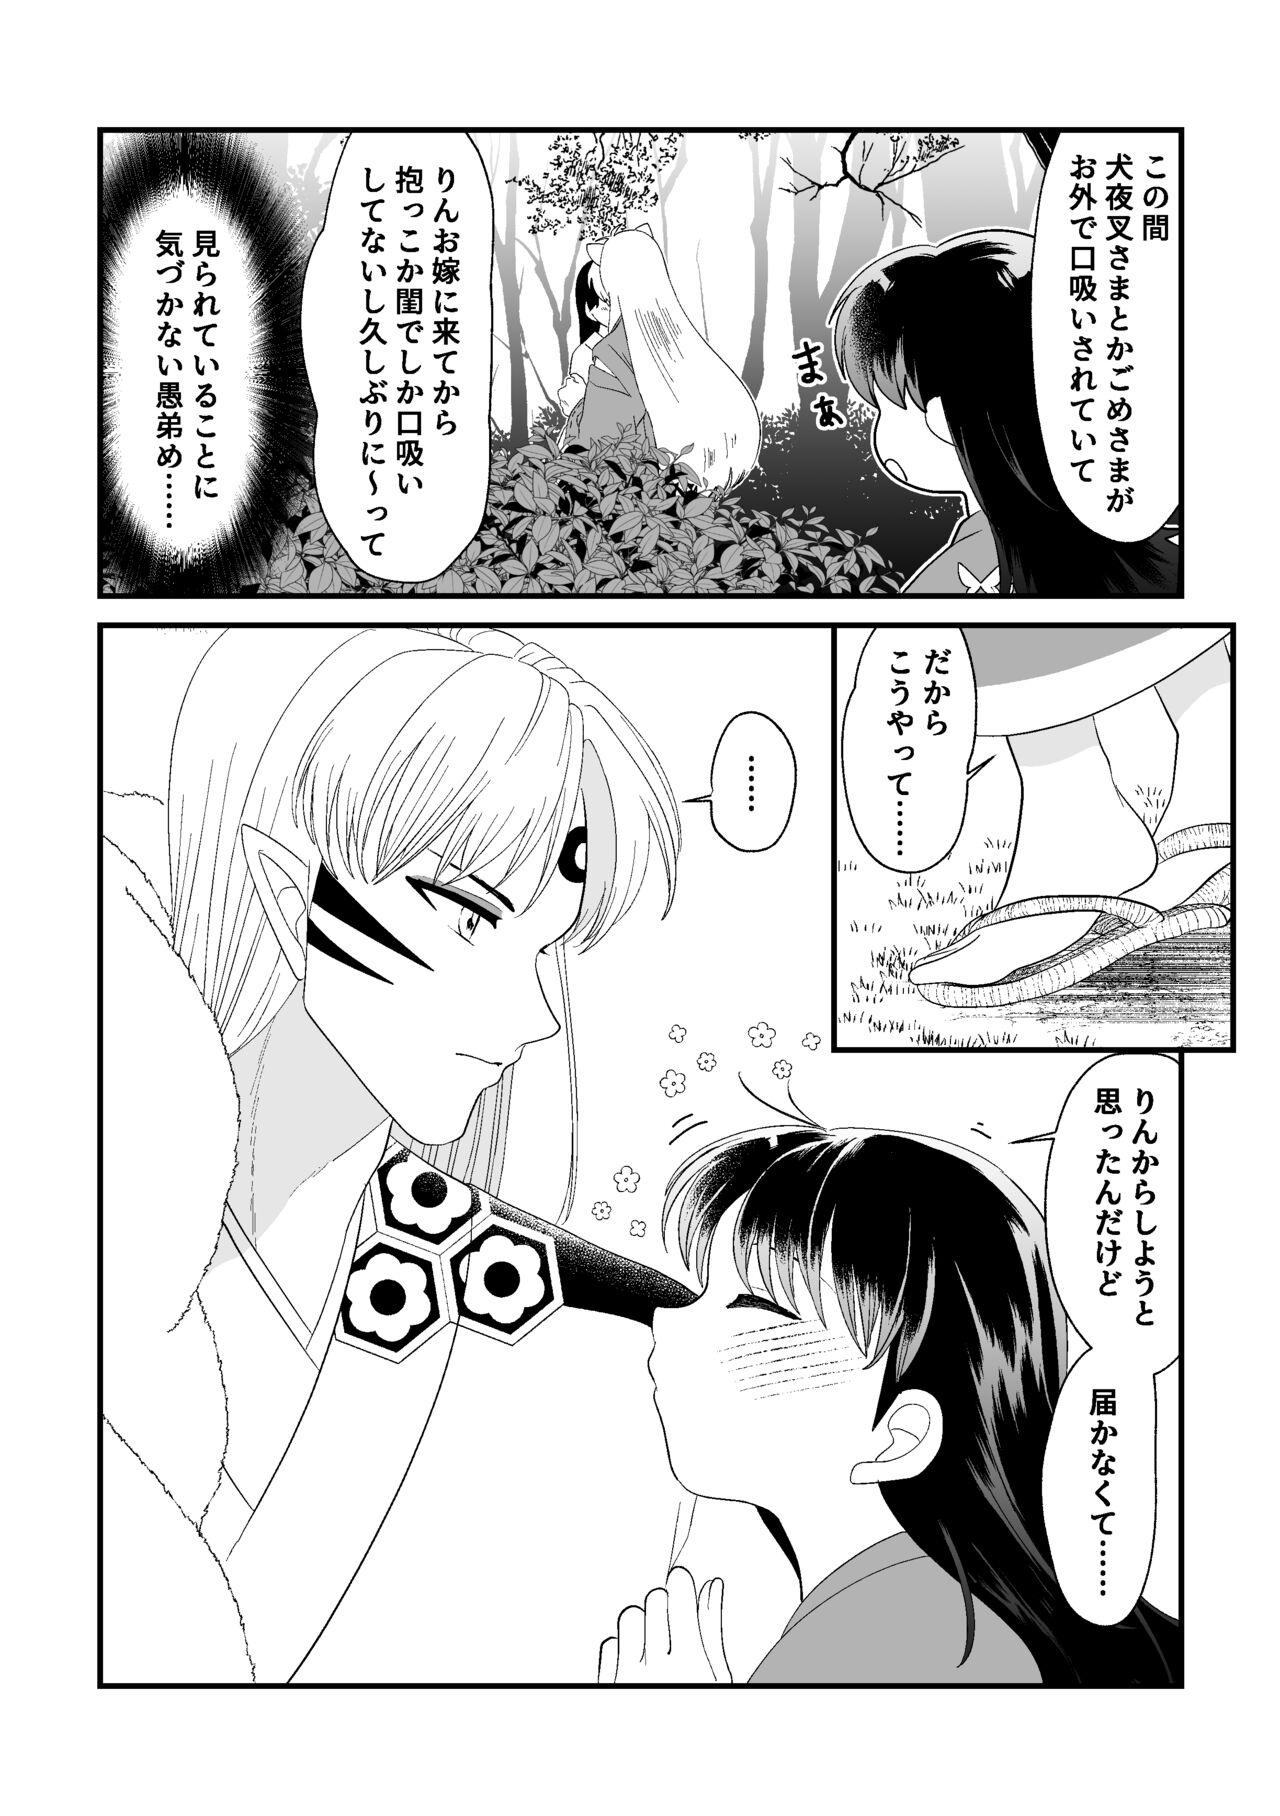 Buttfucking Tatoe Sekai ga Chigatte mo - Inuyasha Bath - Page 6